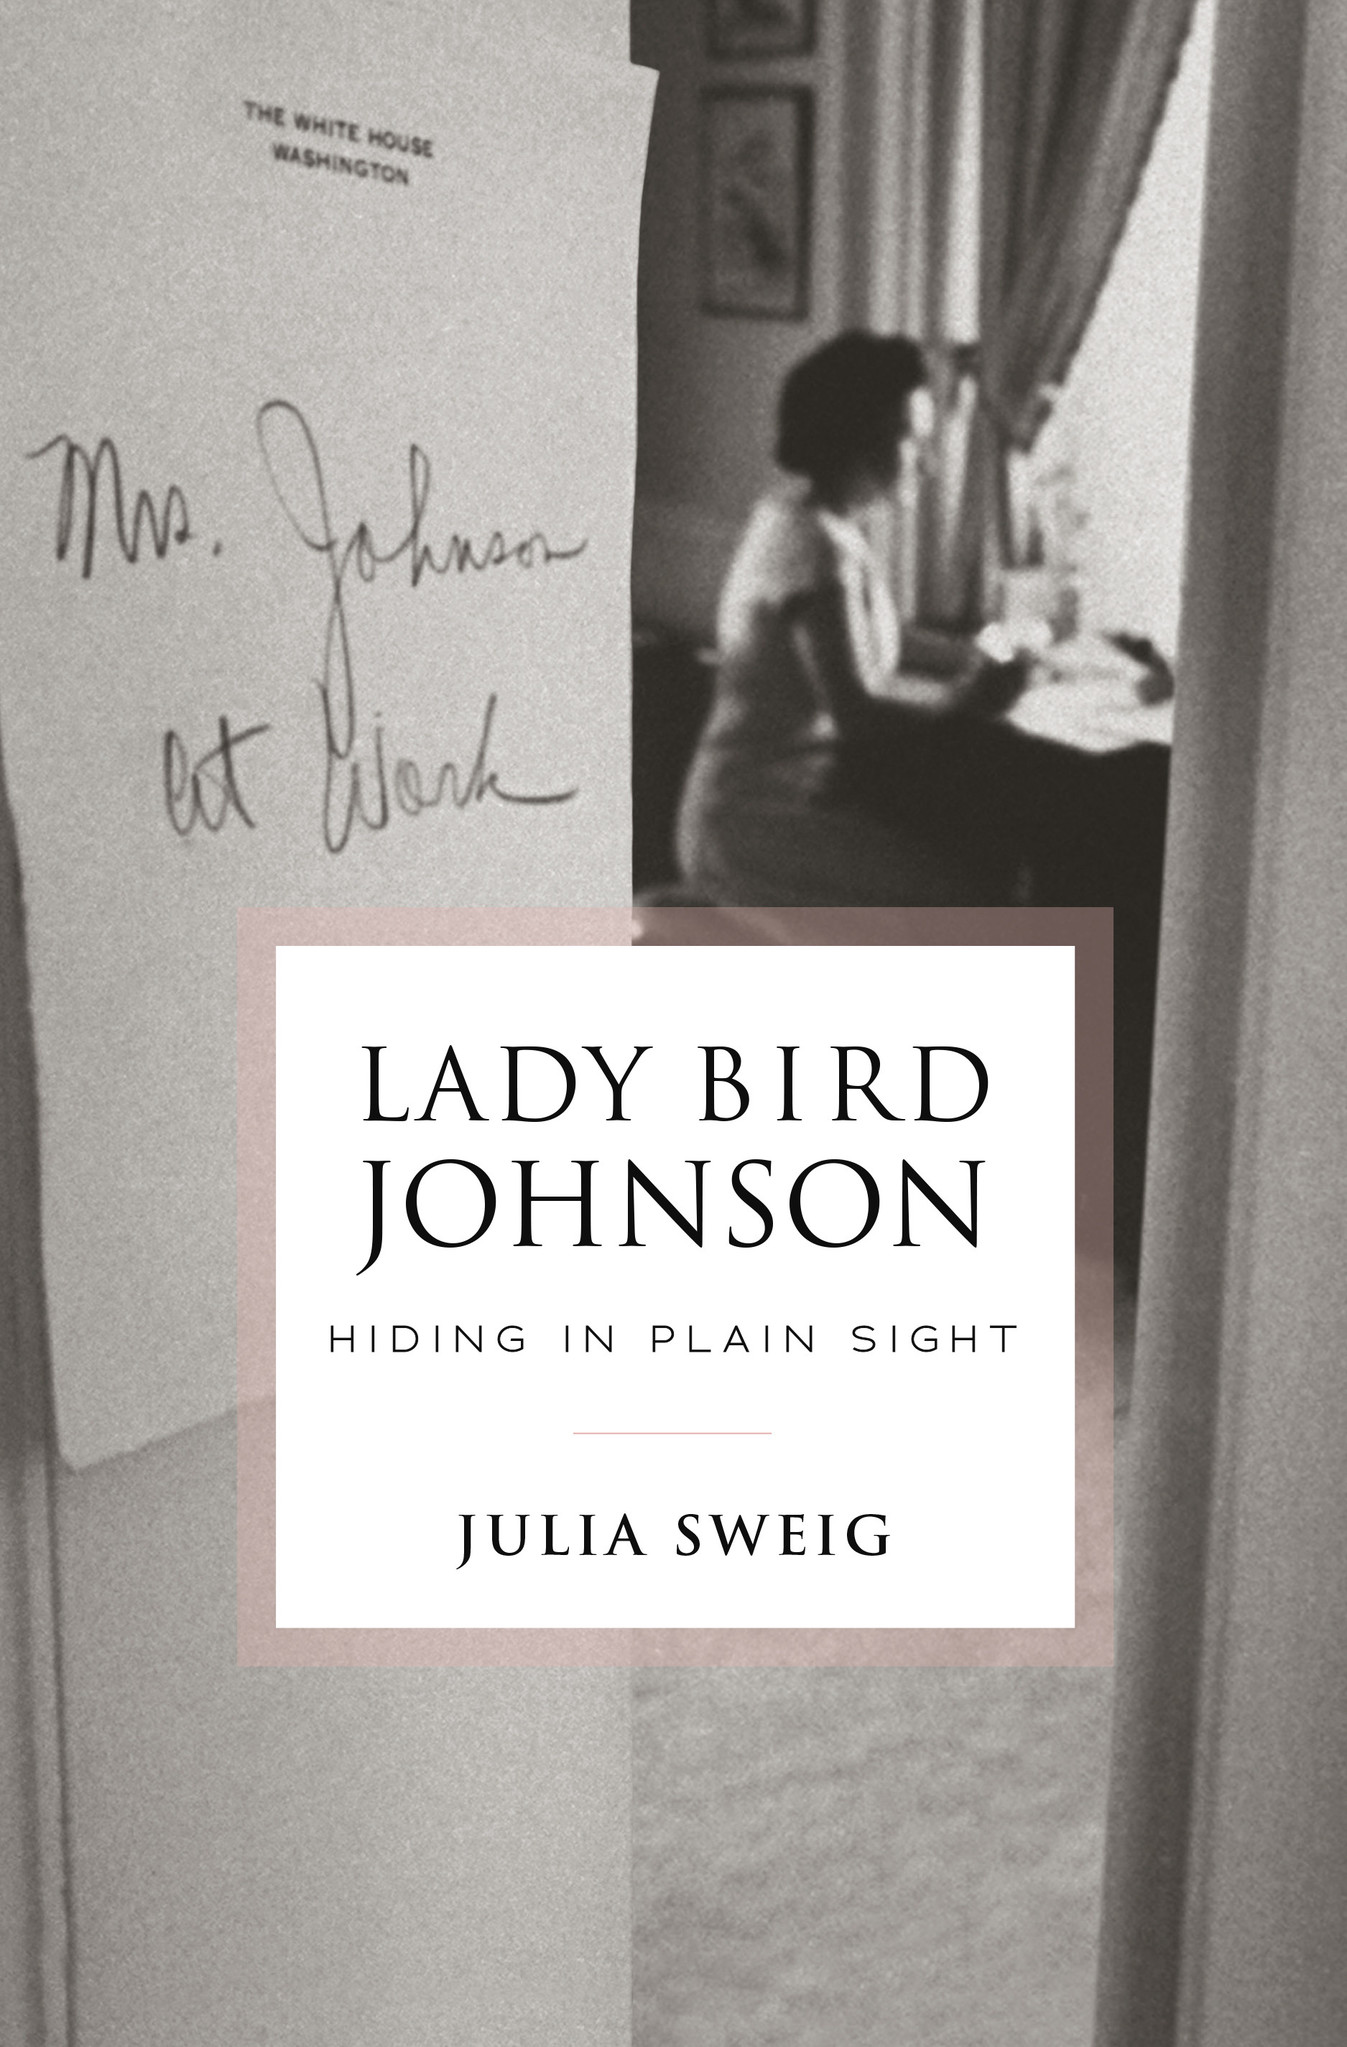 New book on Lady Bird Johnson